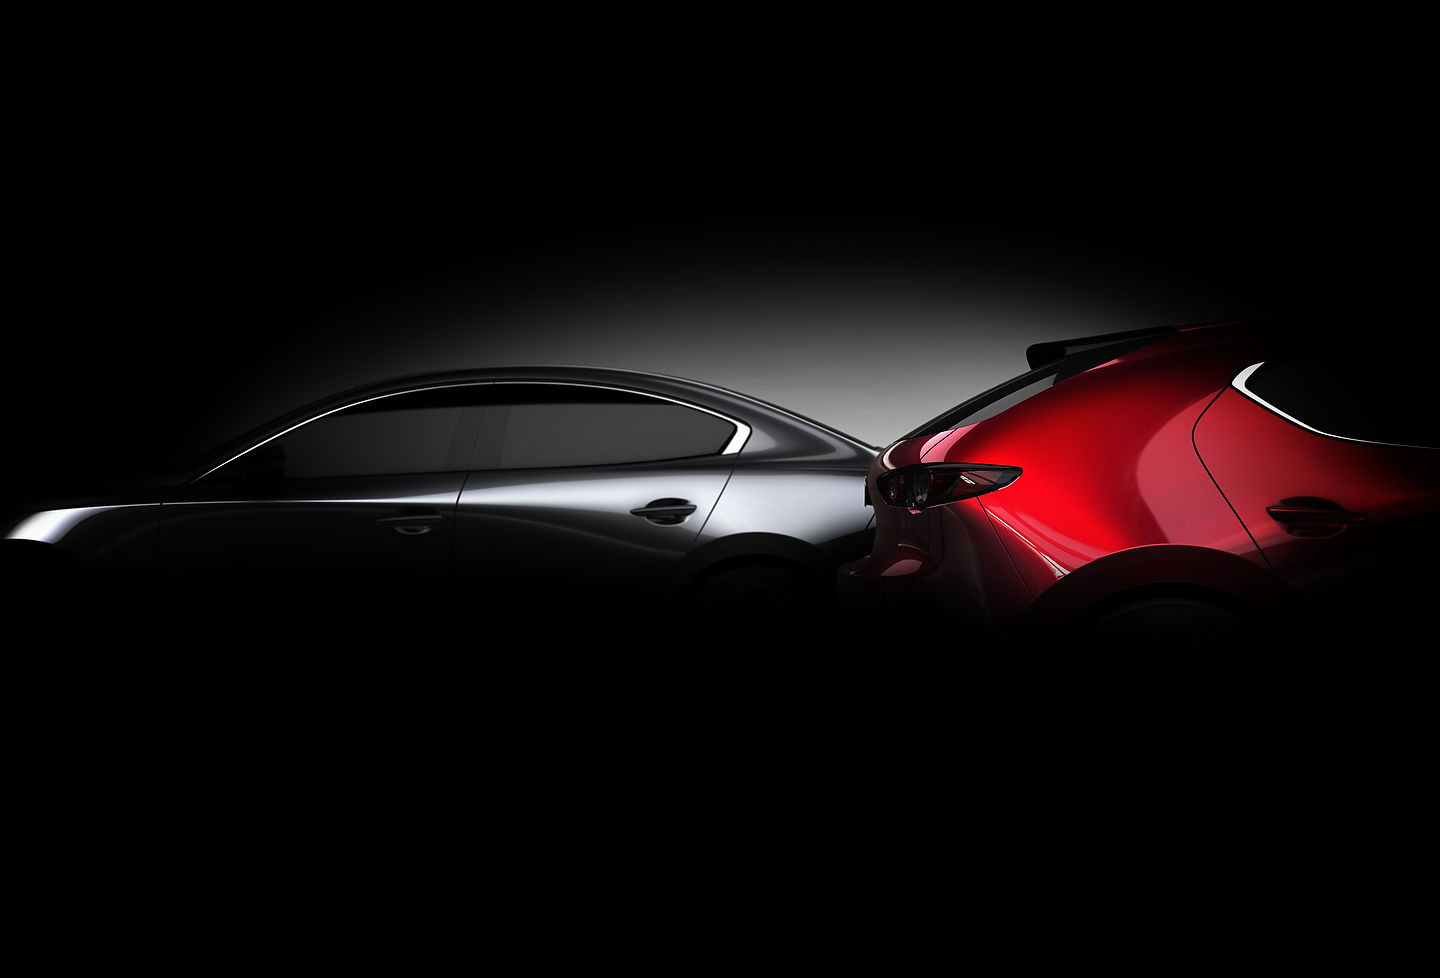 La Mazda3 2019 s’annonce spectaculaire